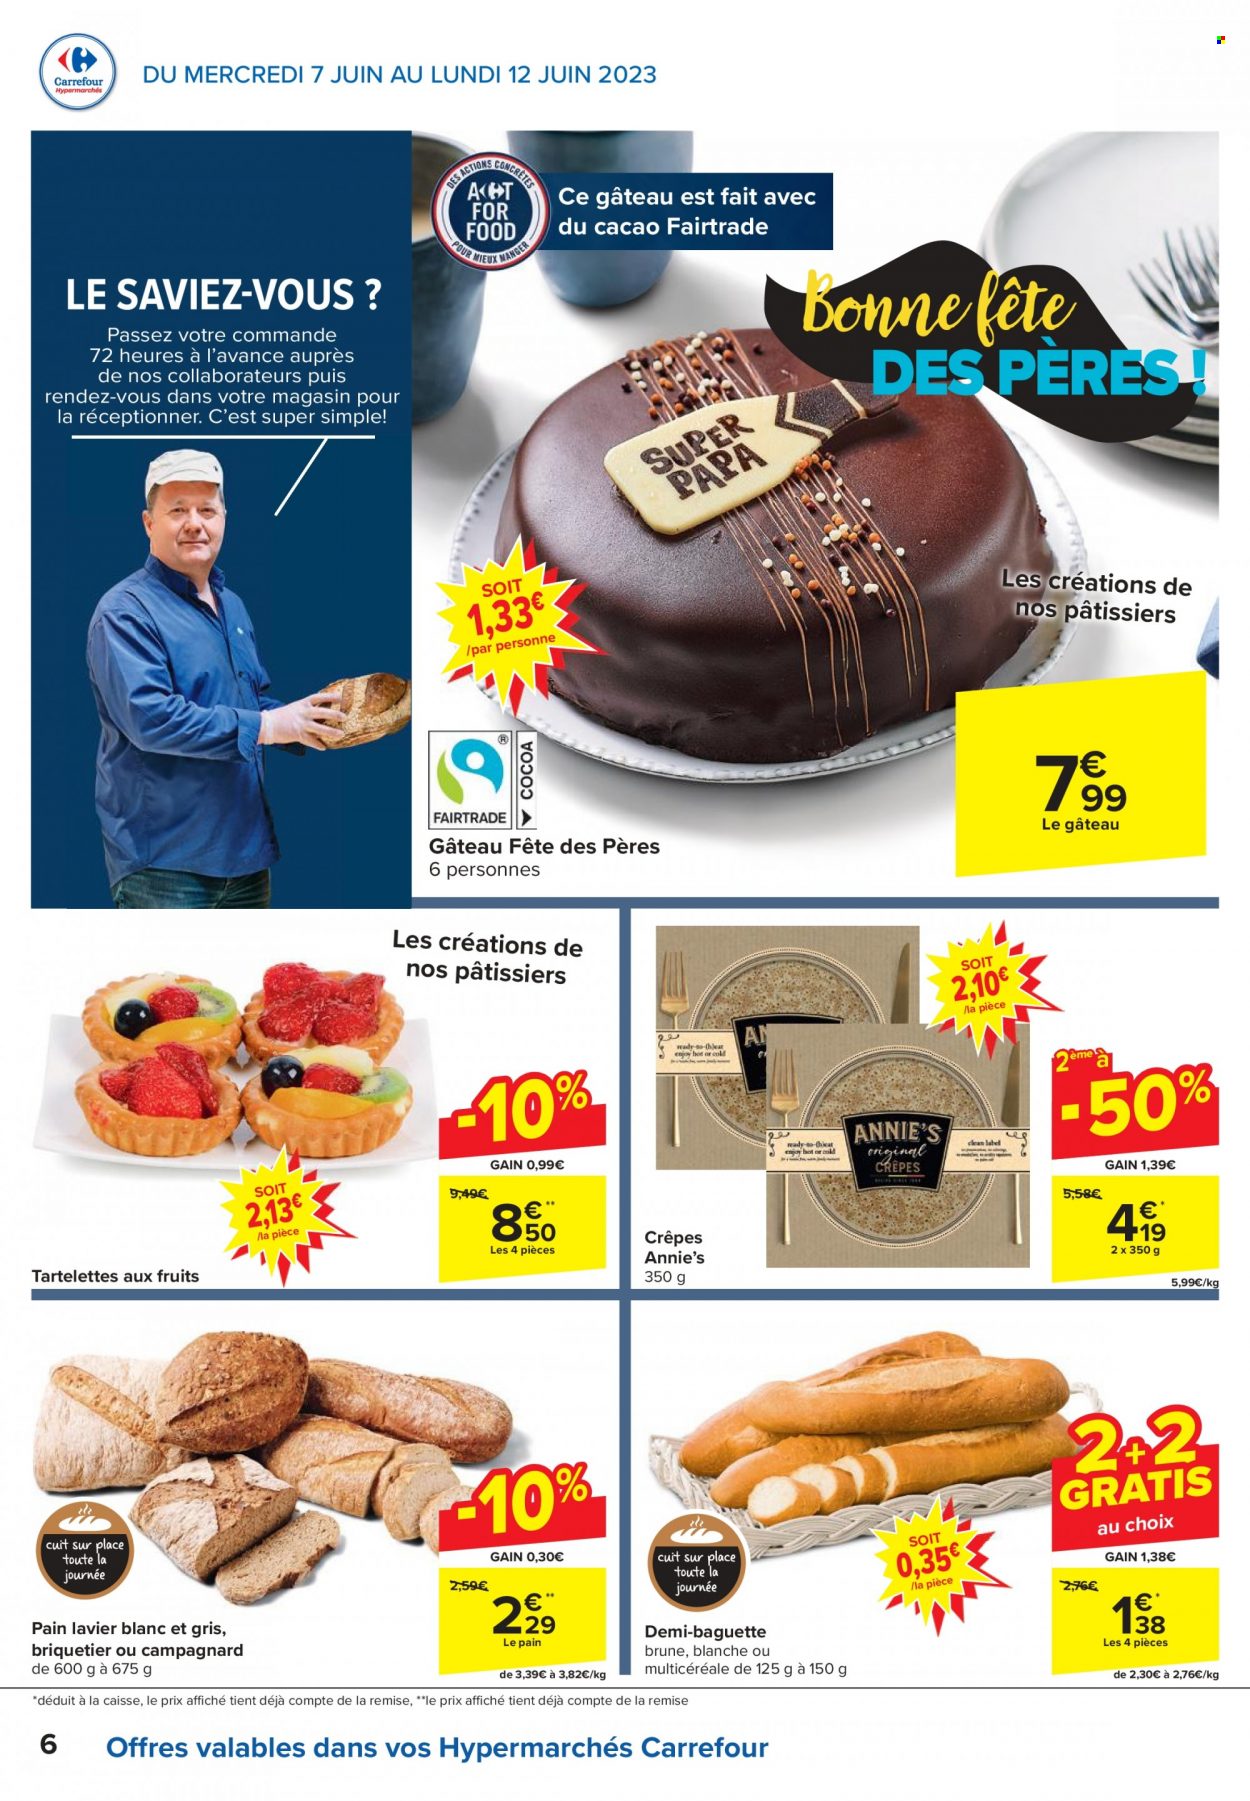 Carrefour hypermarkt-aanbieding  - 7.6.2023 - 19.6.2023. Pagina 6.